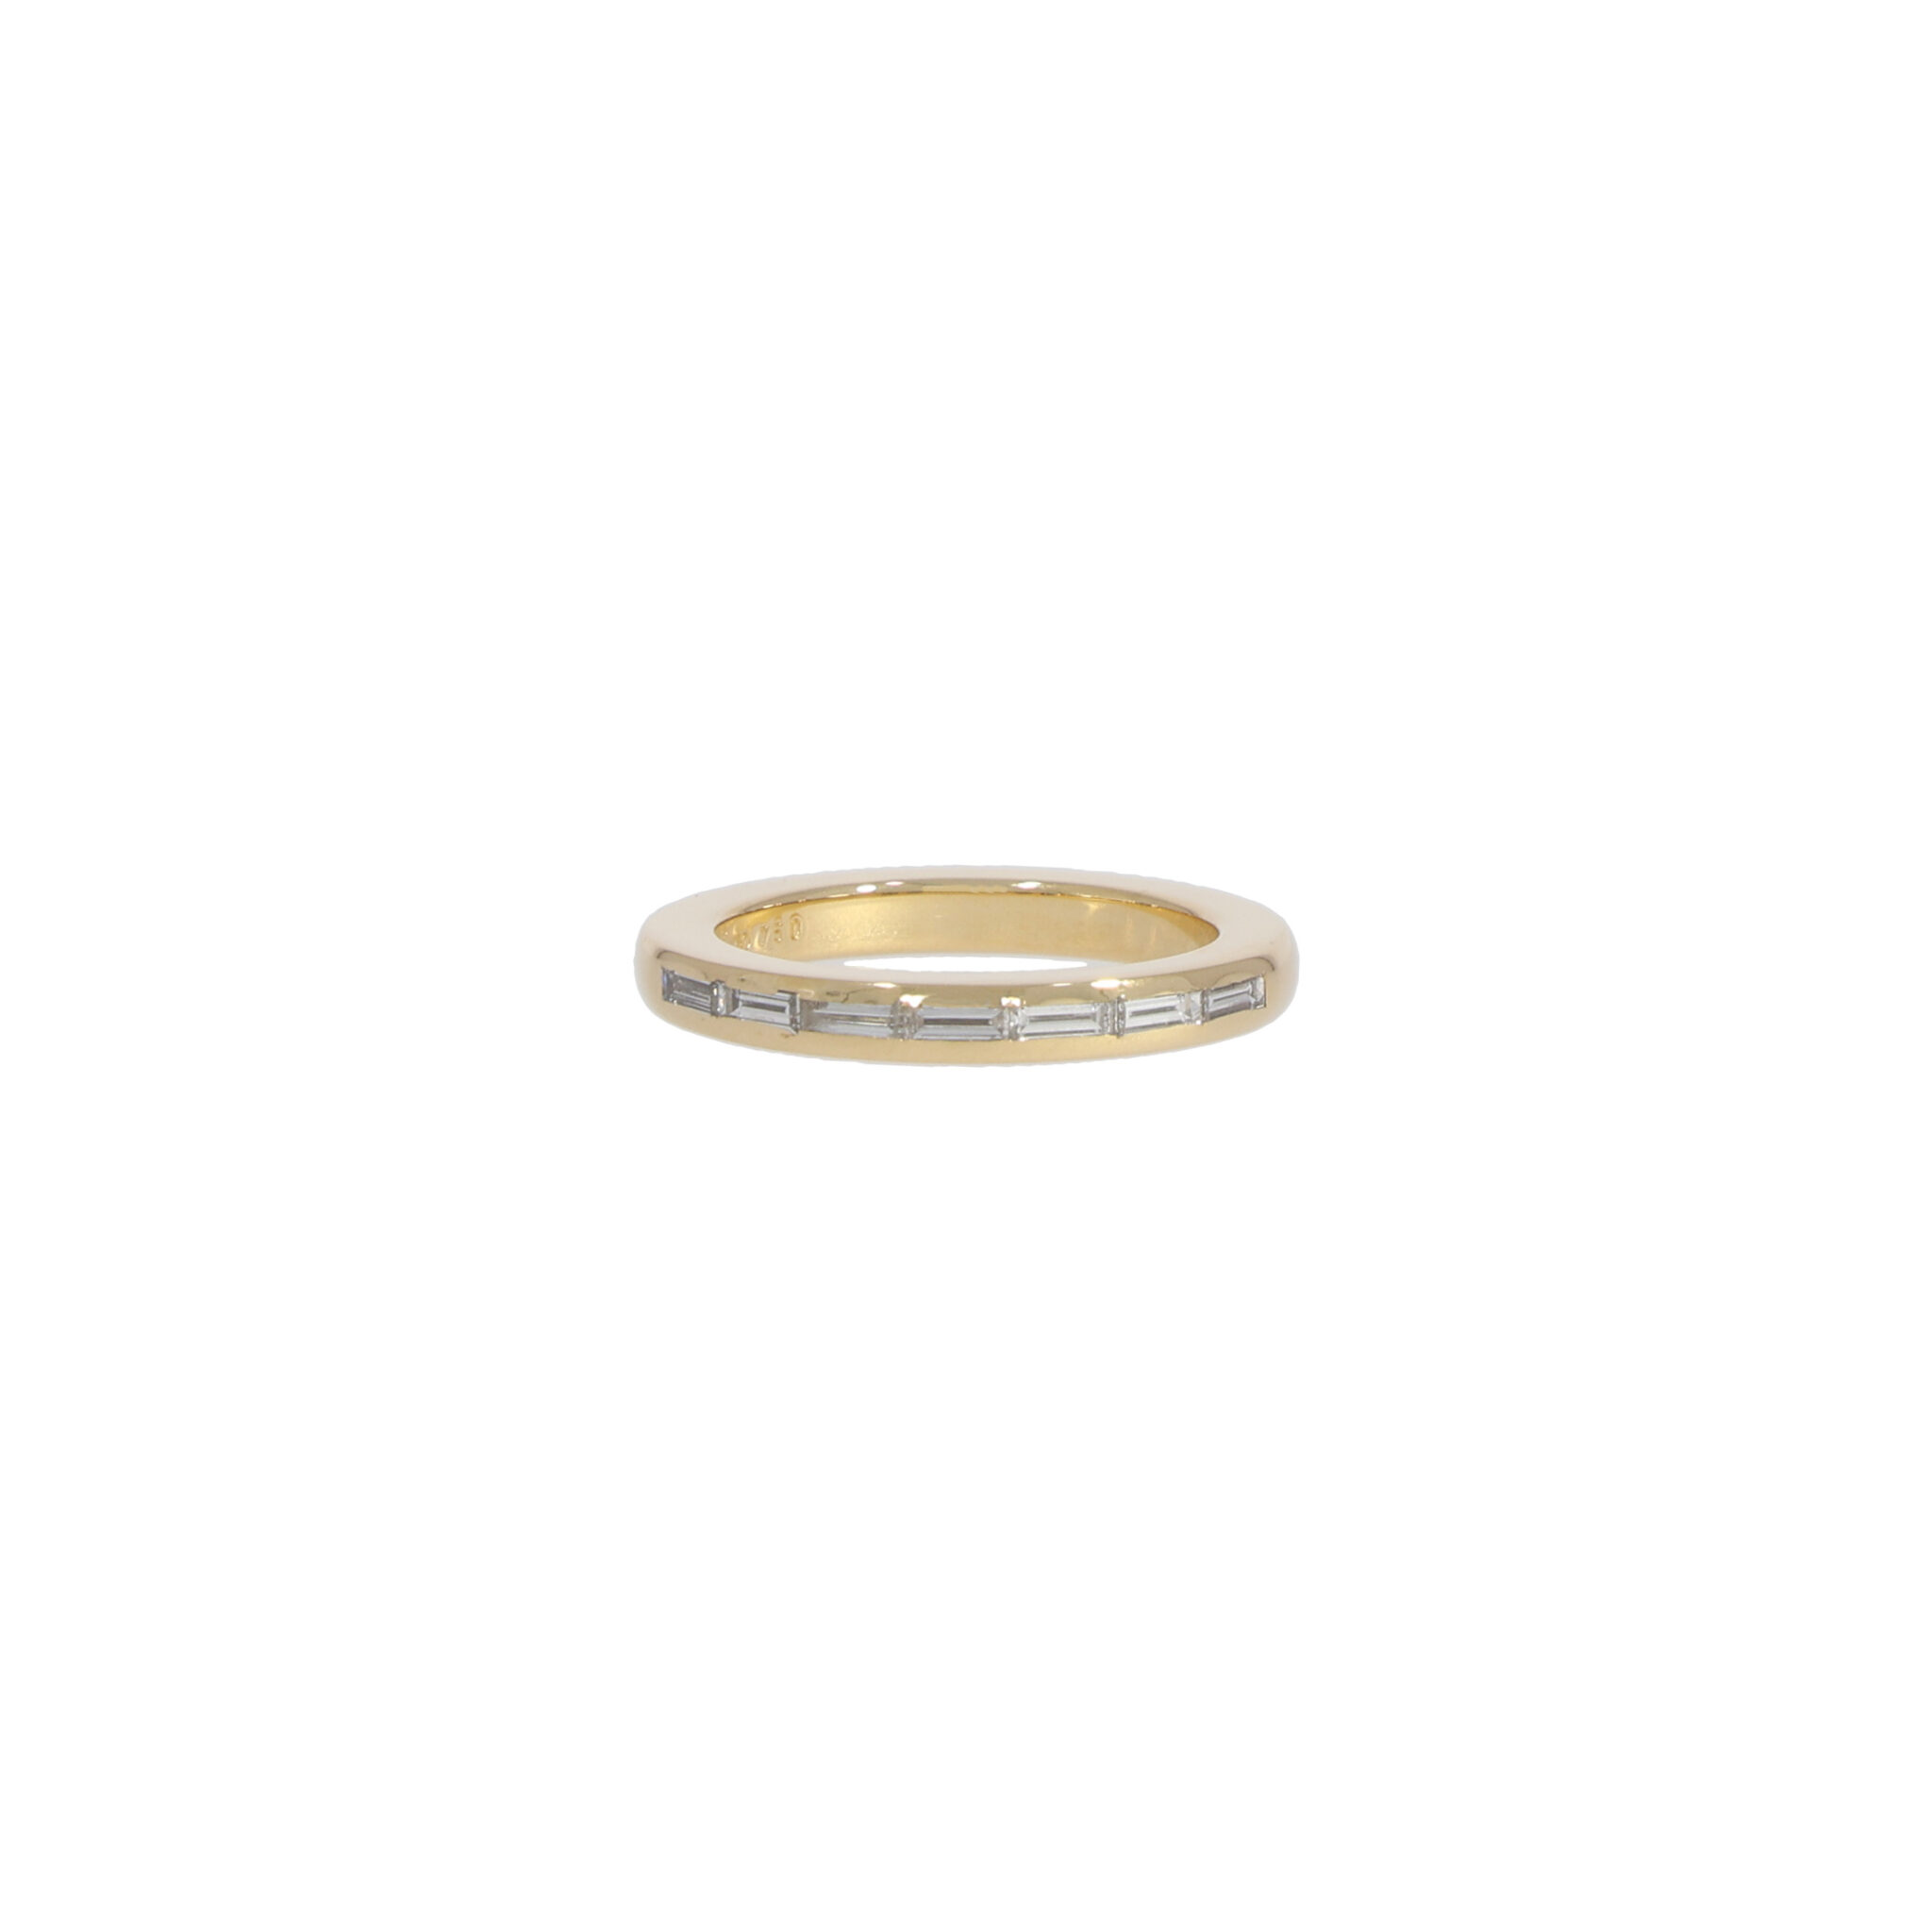 Ring Gelbgold 750 / 18K mit 6 Baguette Diamanten ins. ca. 0,41ct